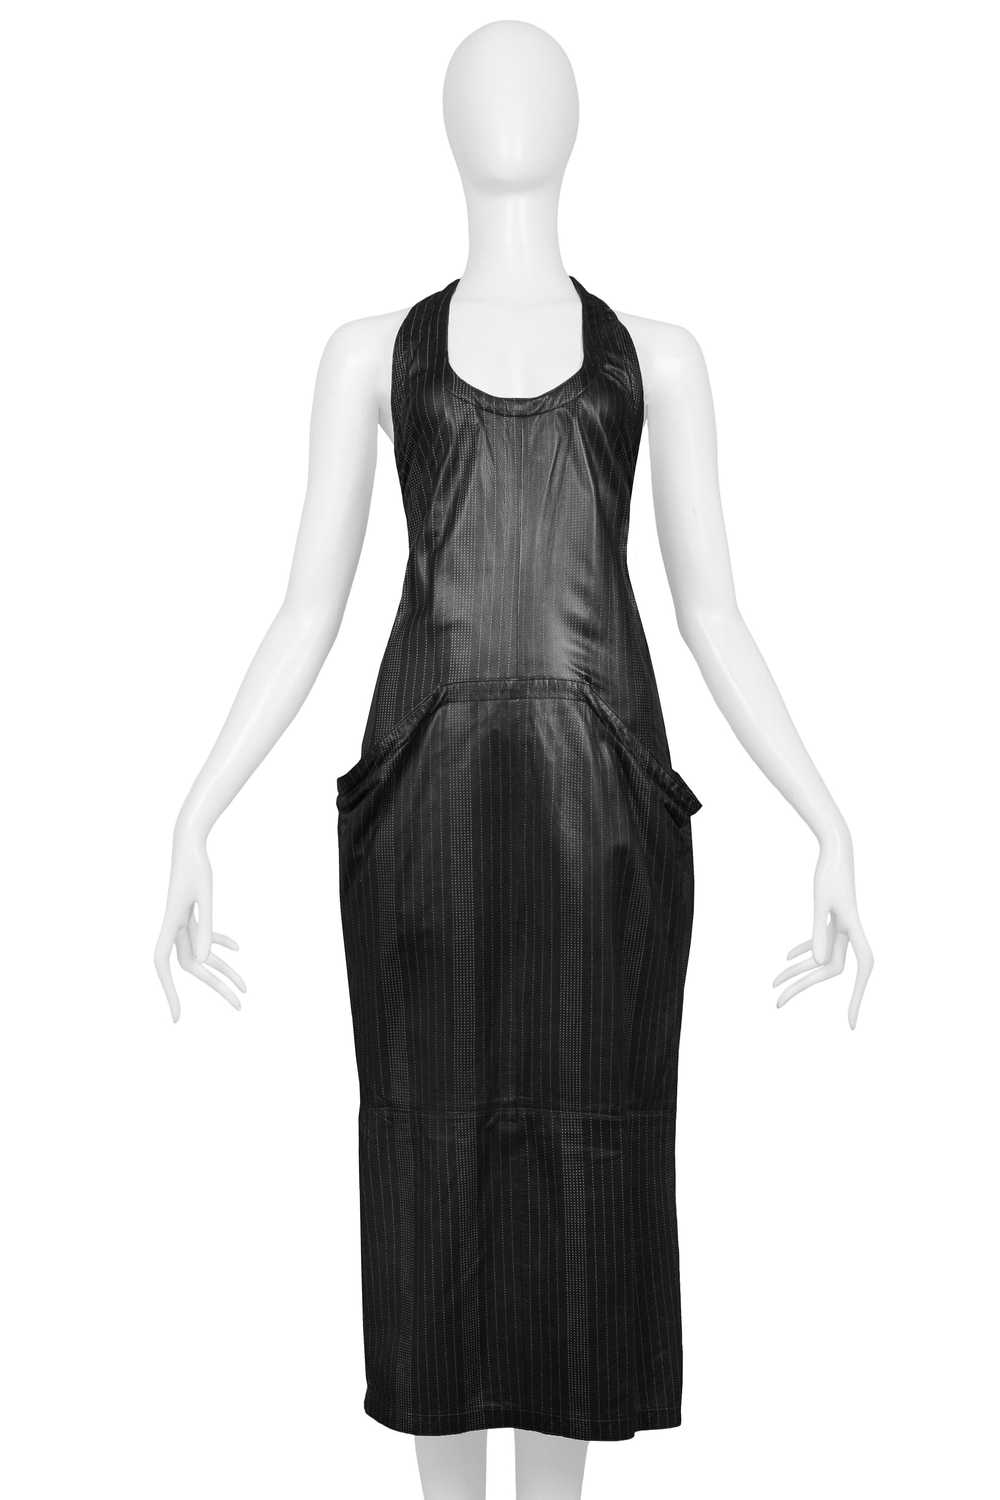 VERSACE BLACK LEATHER PINSTRIPE TANK DRESS 1990s - image 1